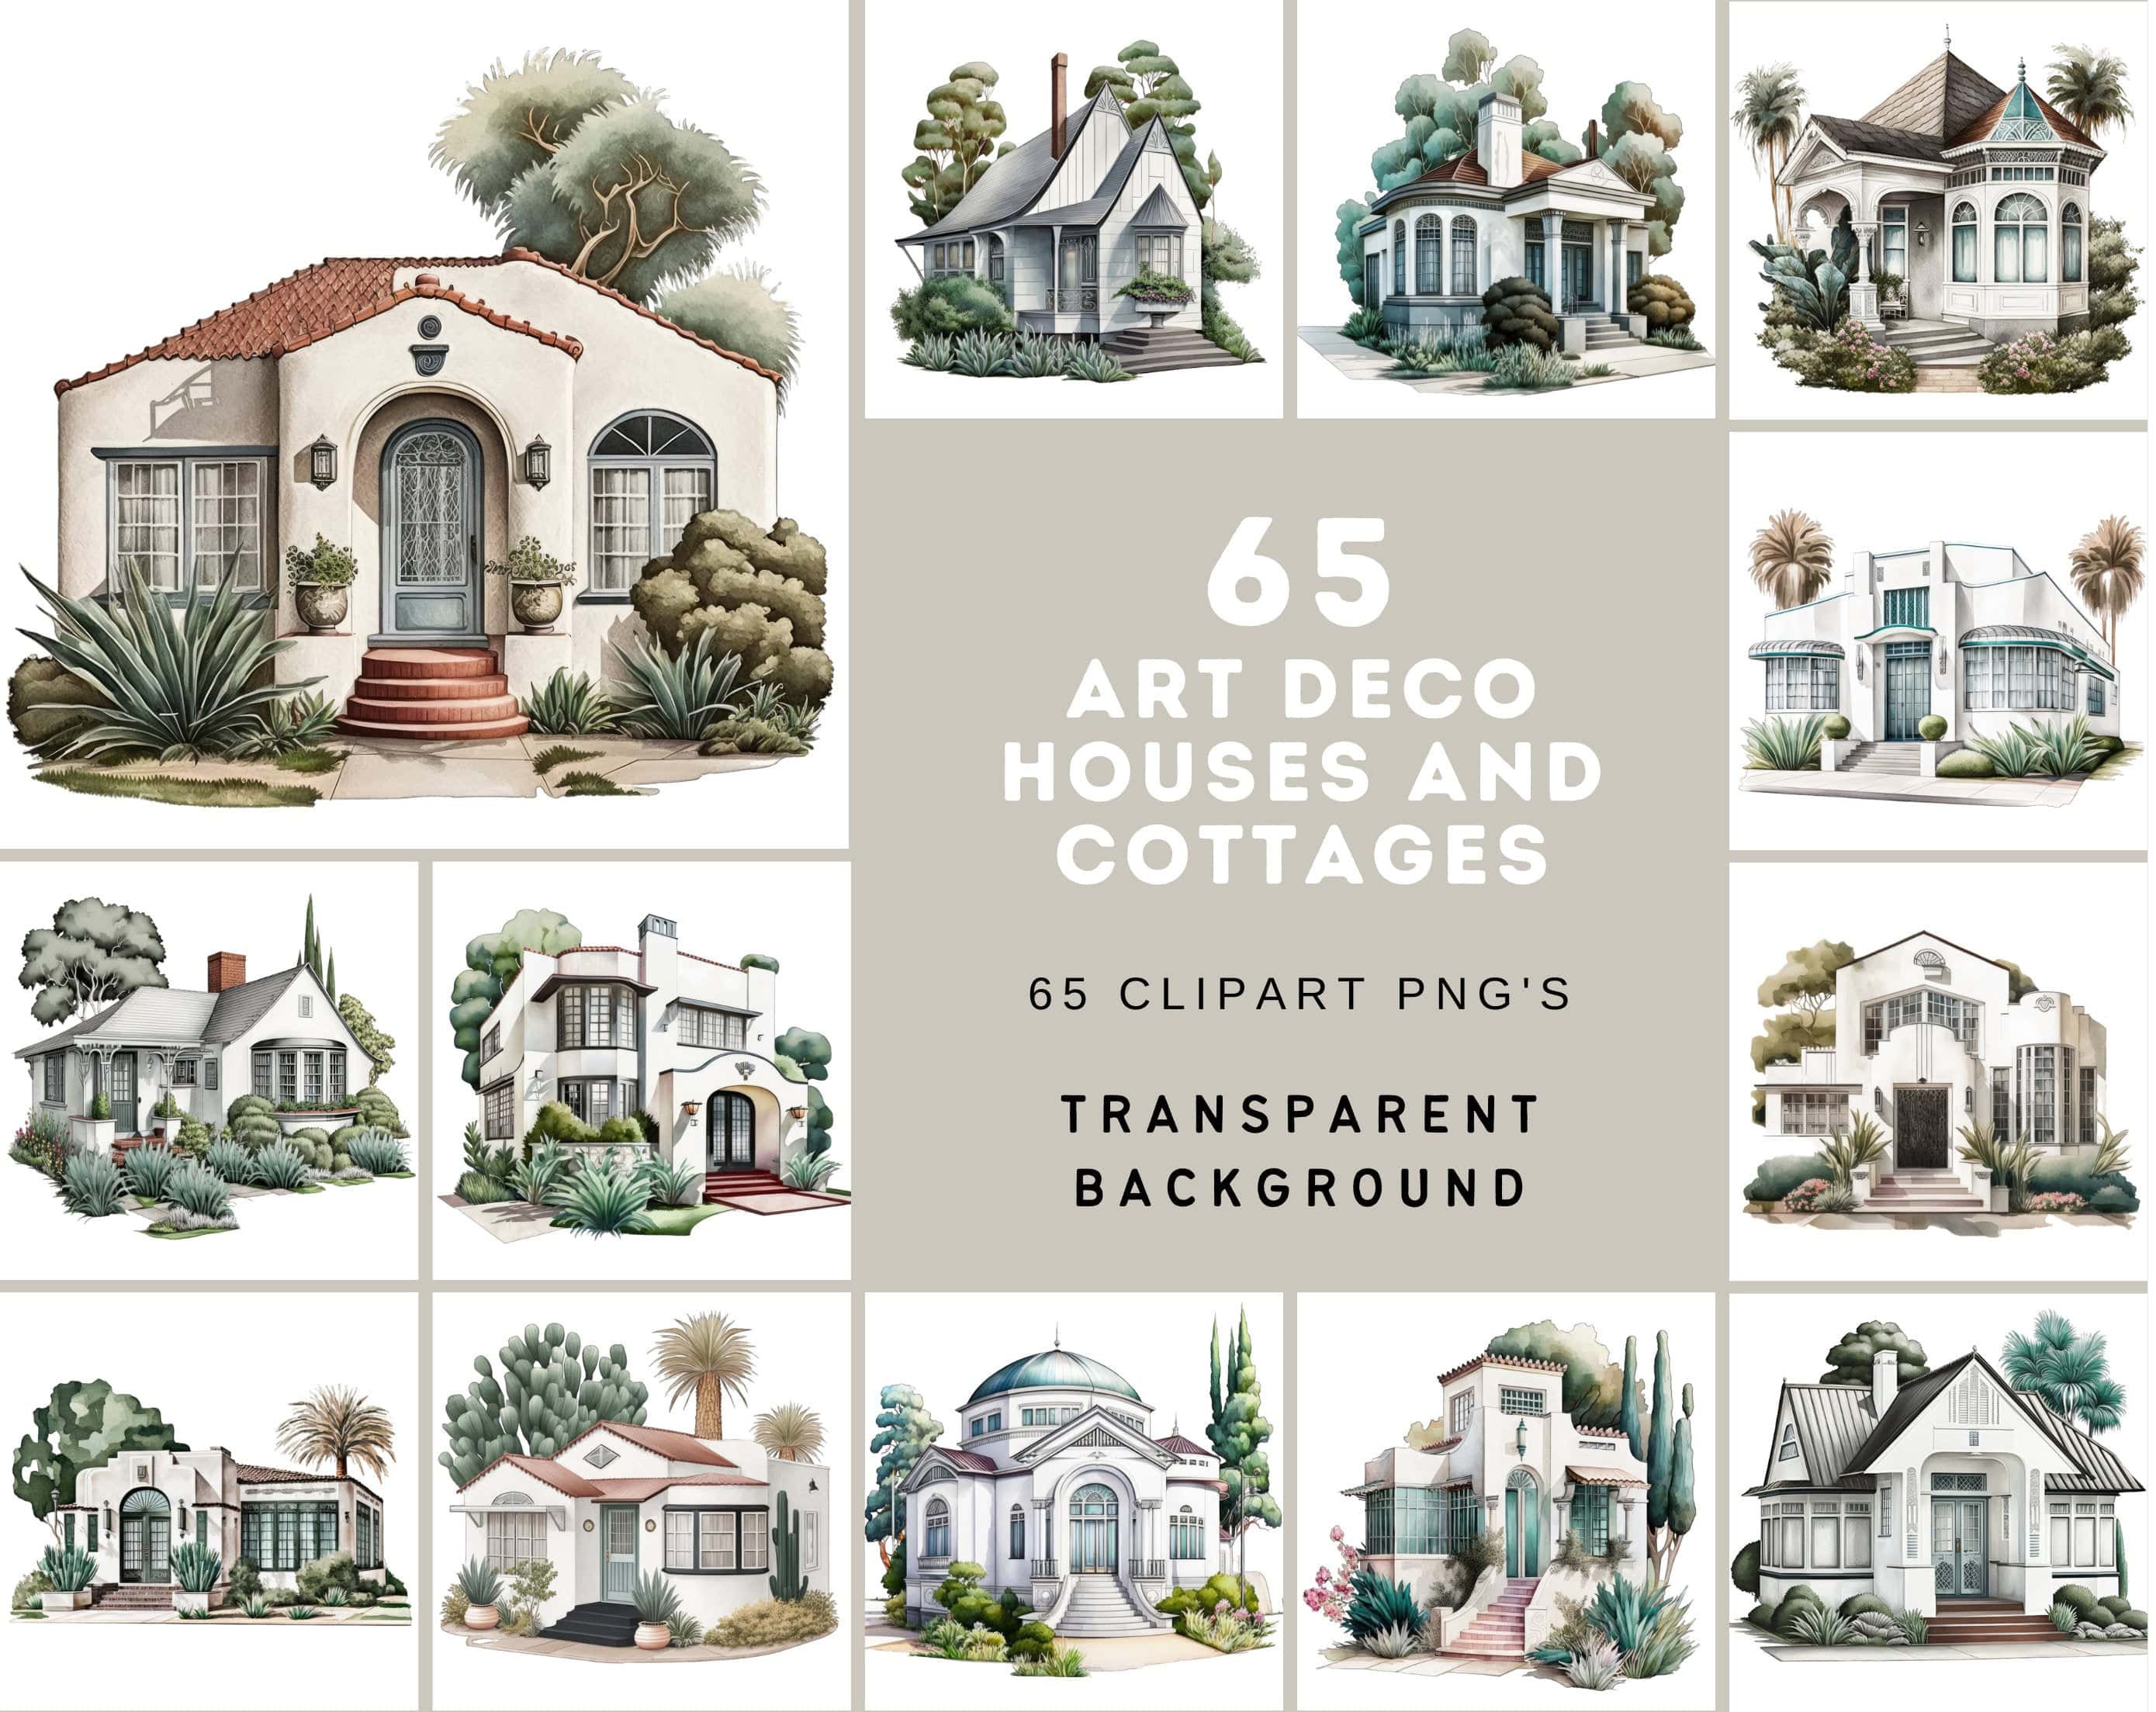 Art Deco House Bundle - 65 Vintage Home & Cottage Illustrations, Instant Download, Digital Prints, Architecture Wall Art Collection Digital Download Sumobundle